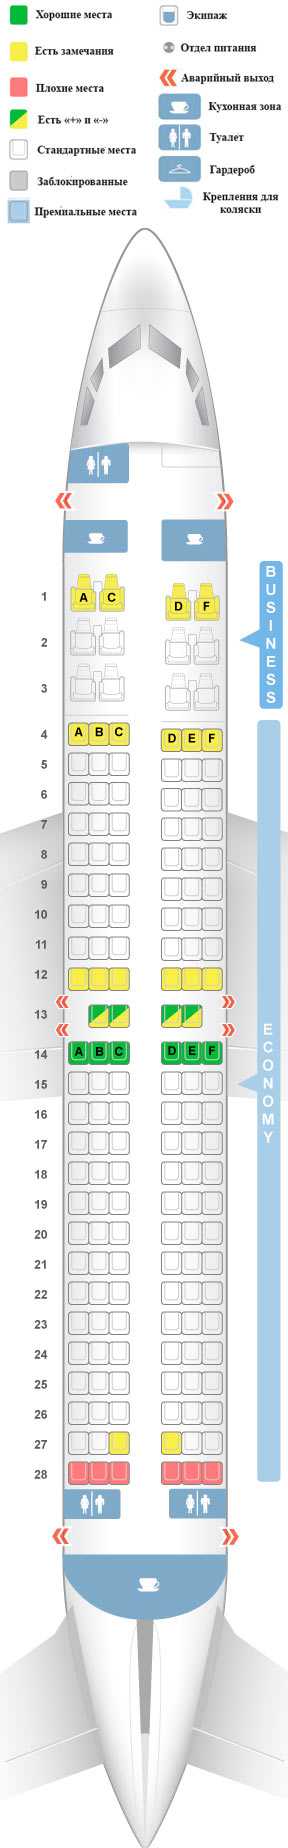 Боинг 767 300 схема салона лучшие места